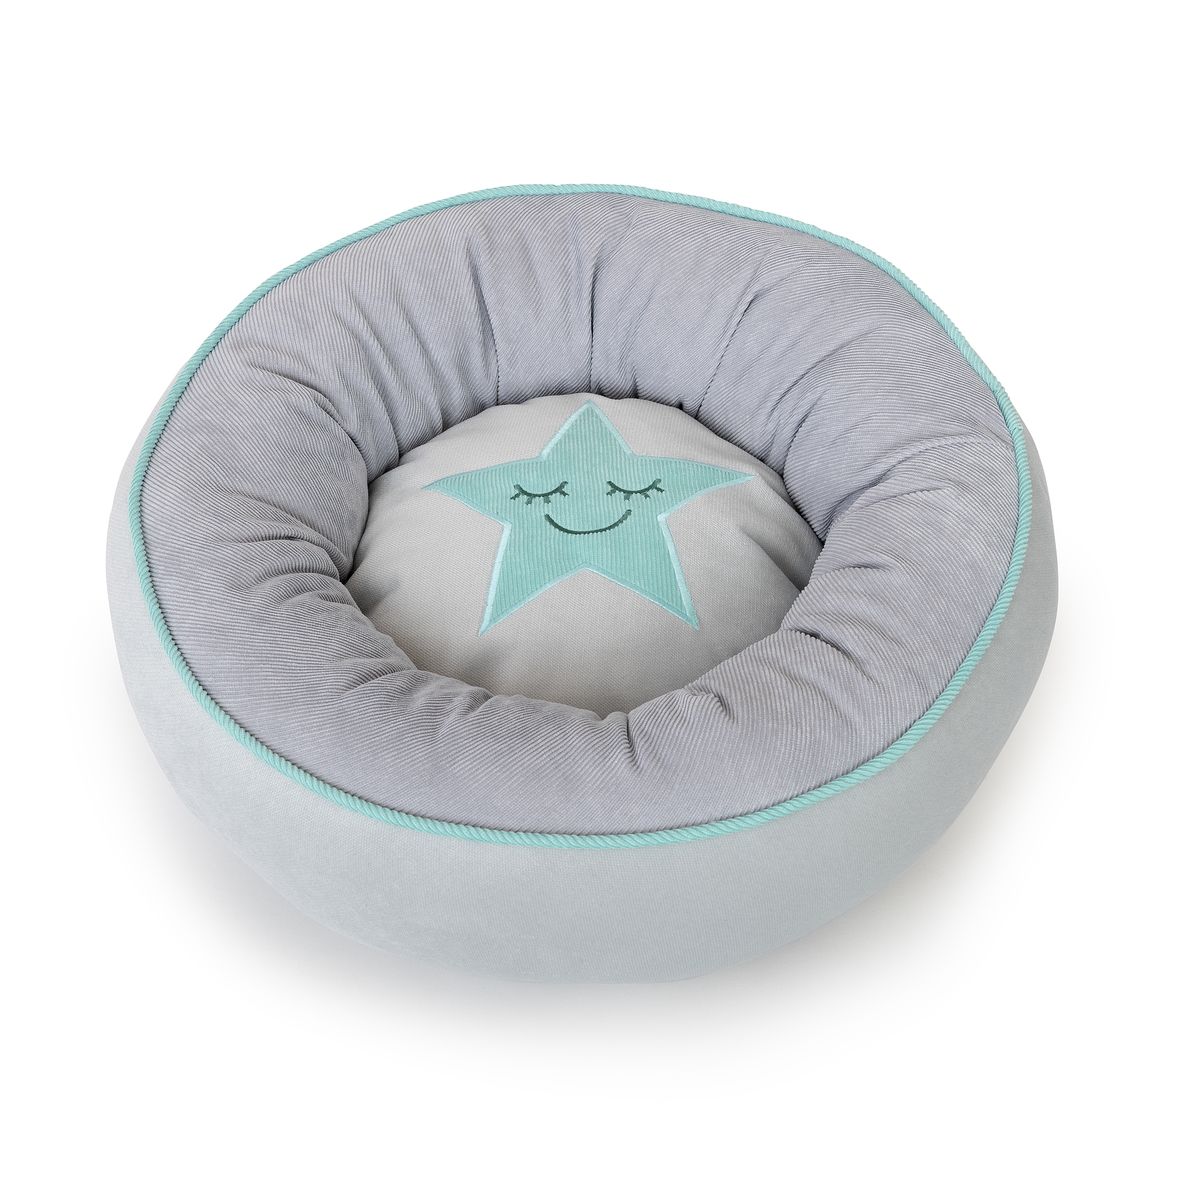 Star round dog bed gray